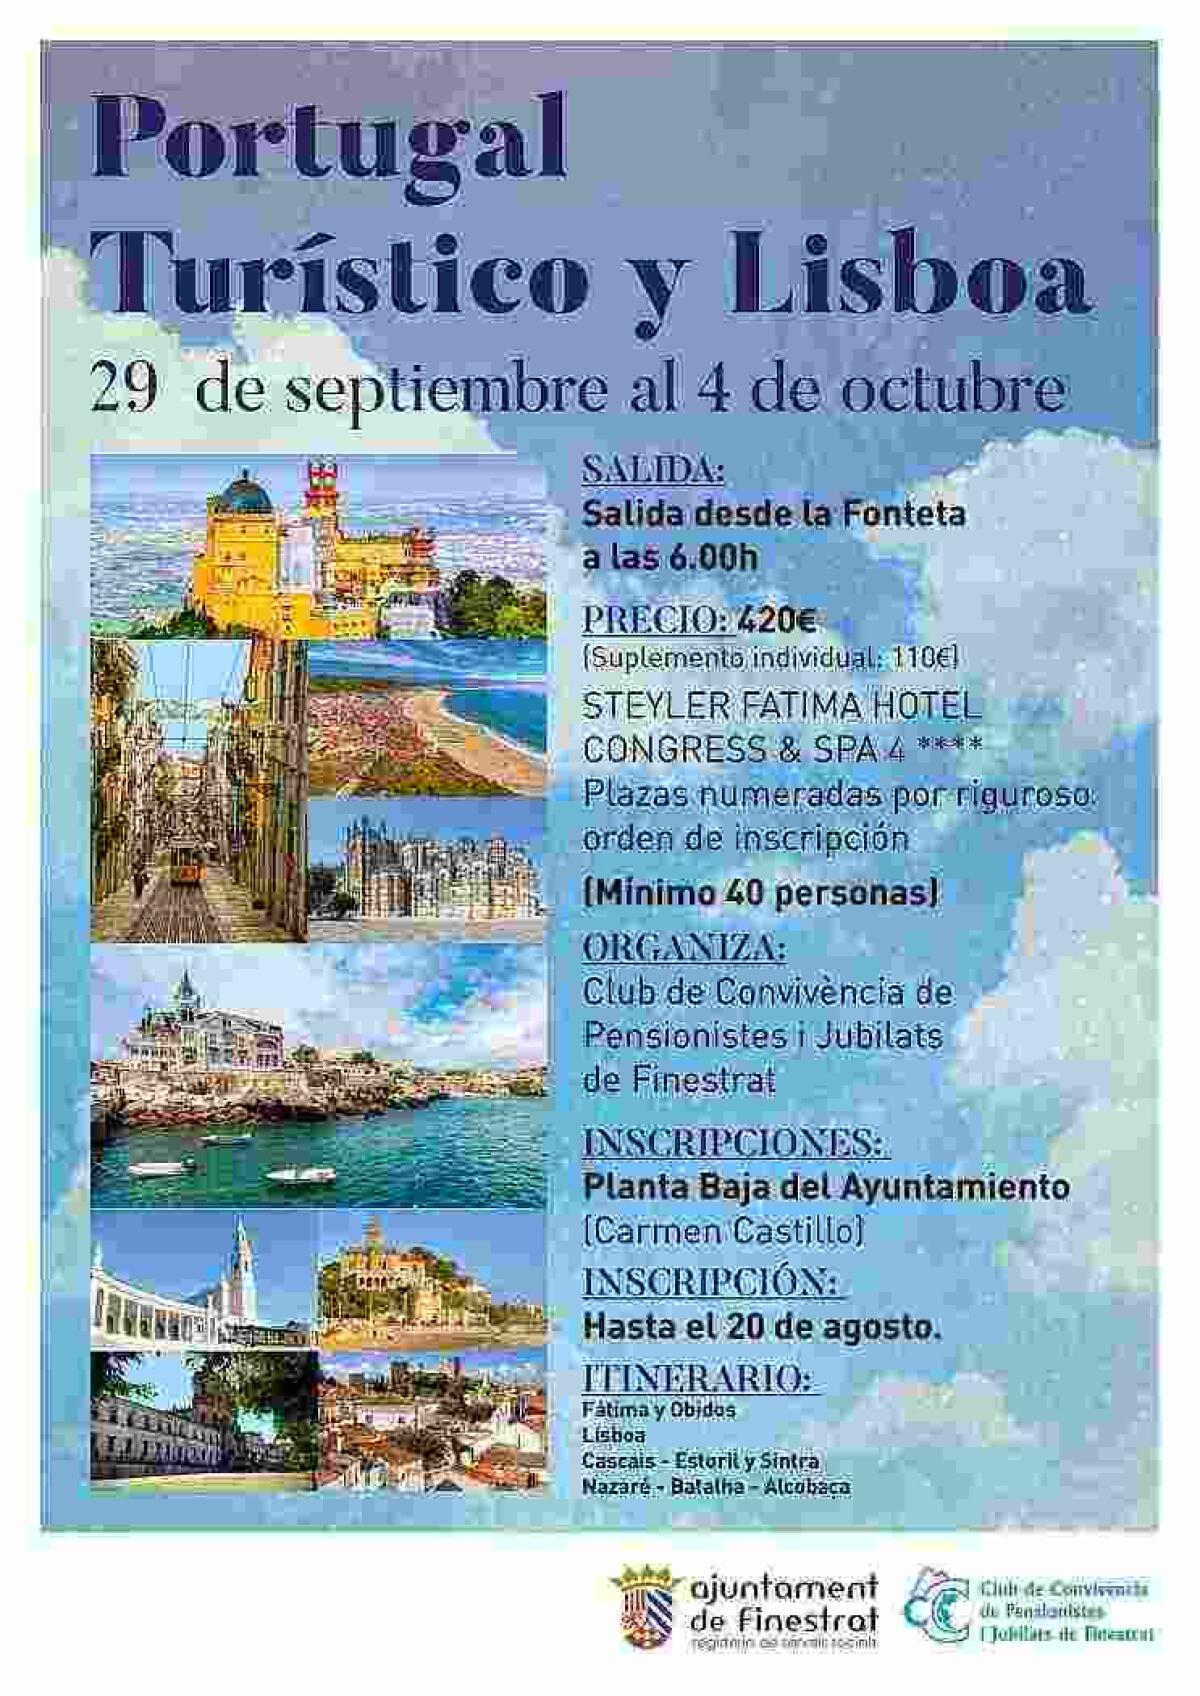 Finestrat organiza un viaje a Portugal del 29 de septiembre al 4 de octubre